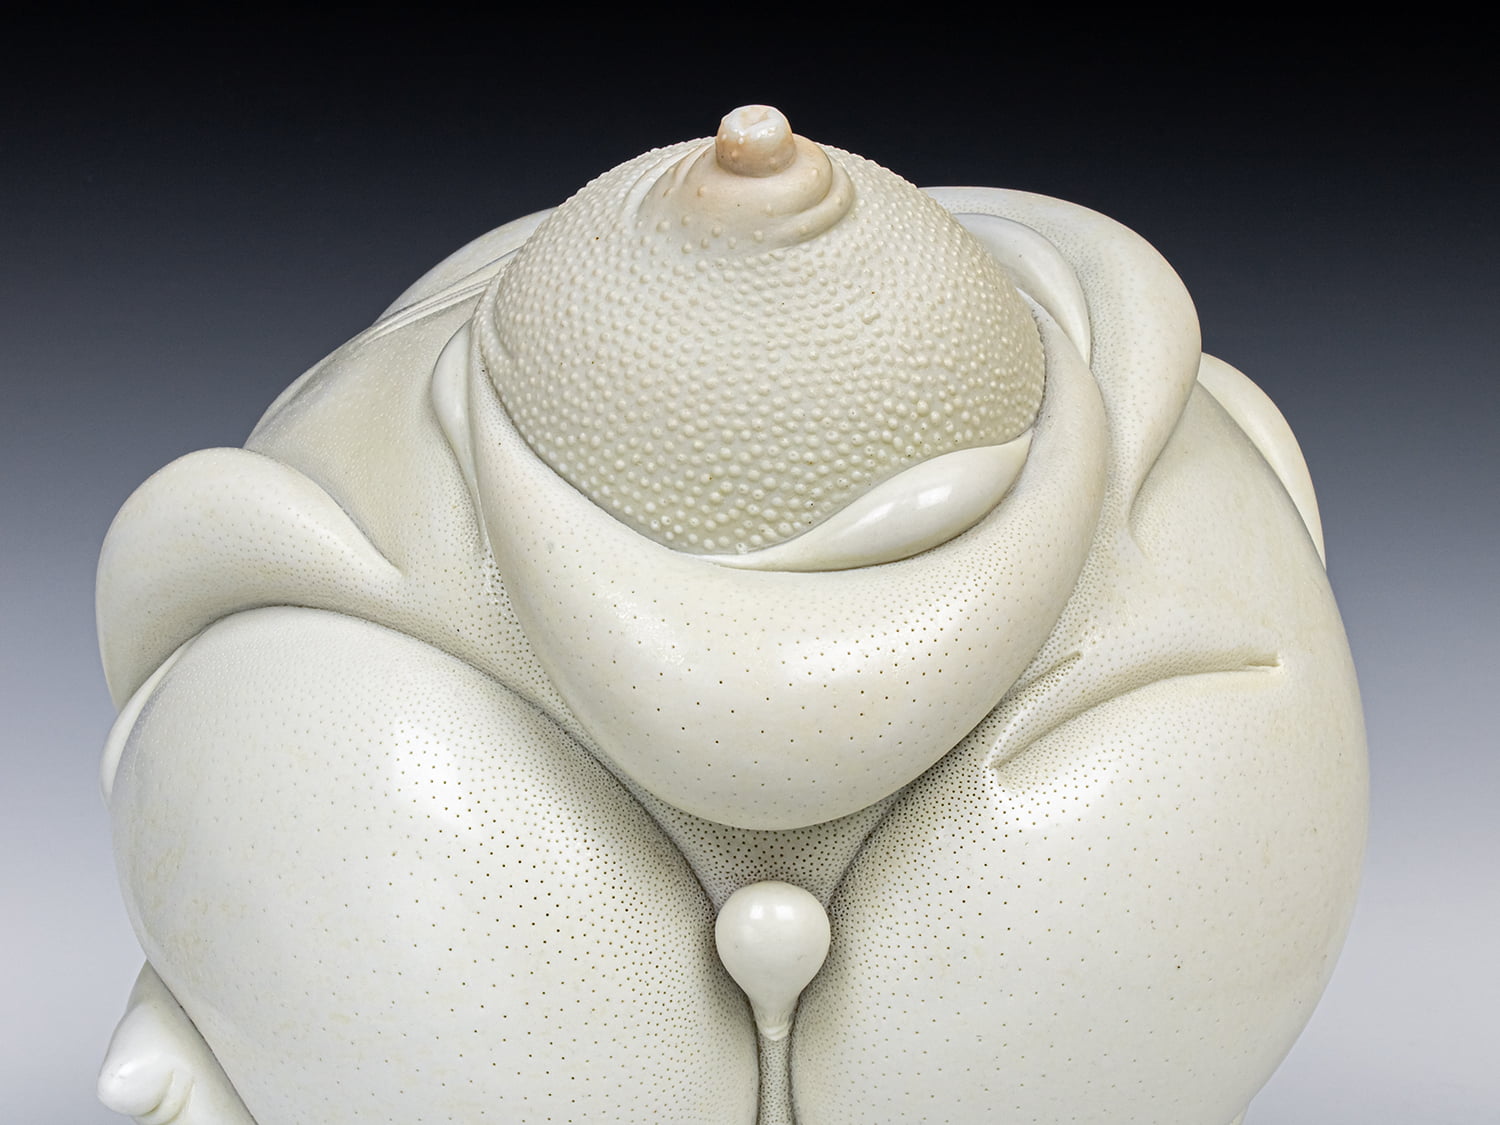 Jason Briggs "Royal" (detail 1). porcelain and mixed media sculpture ceramics.